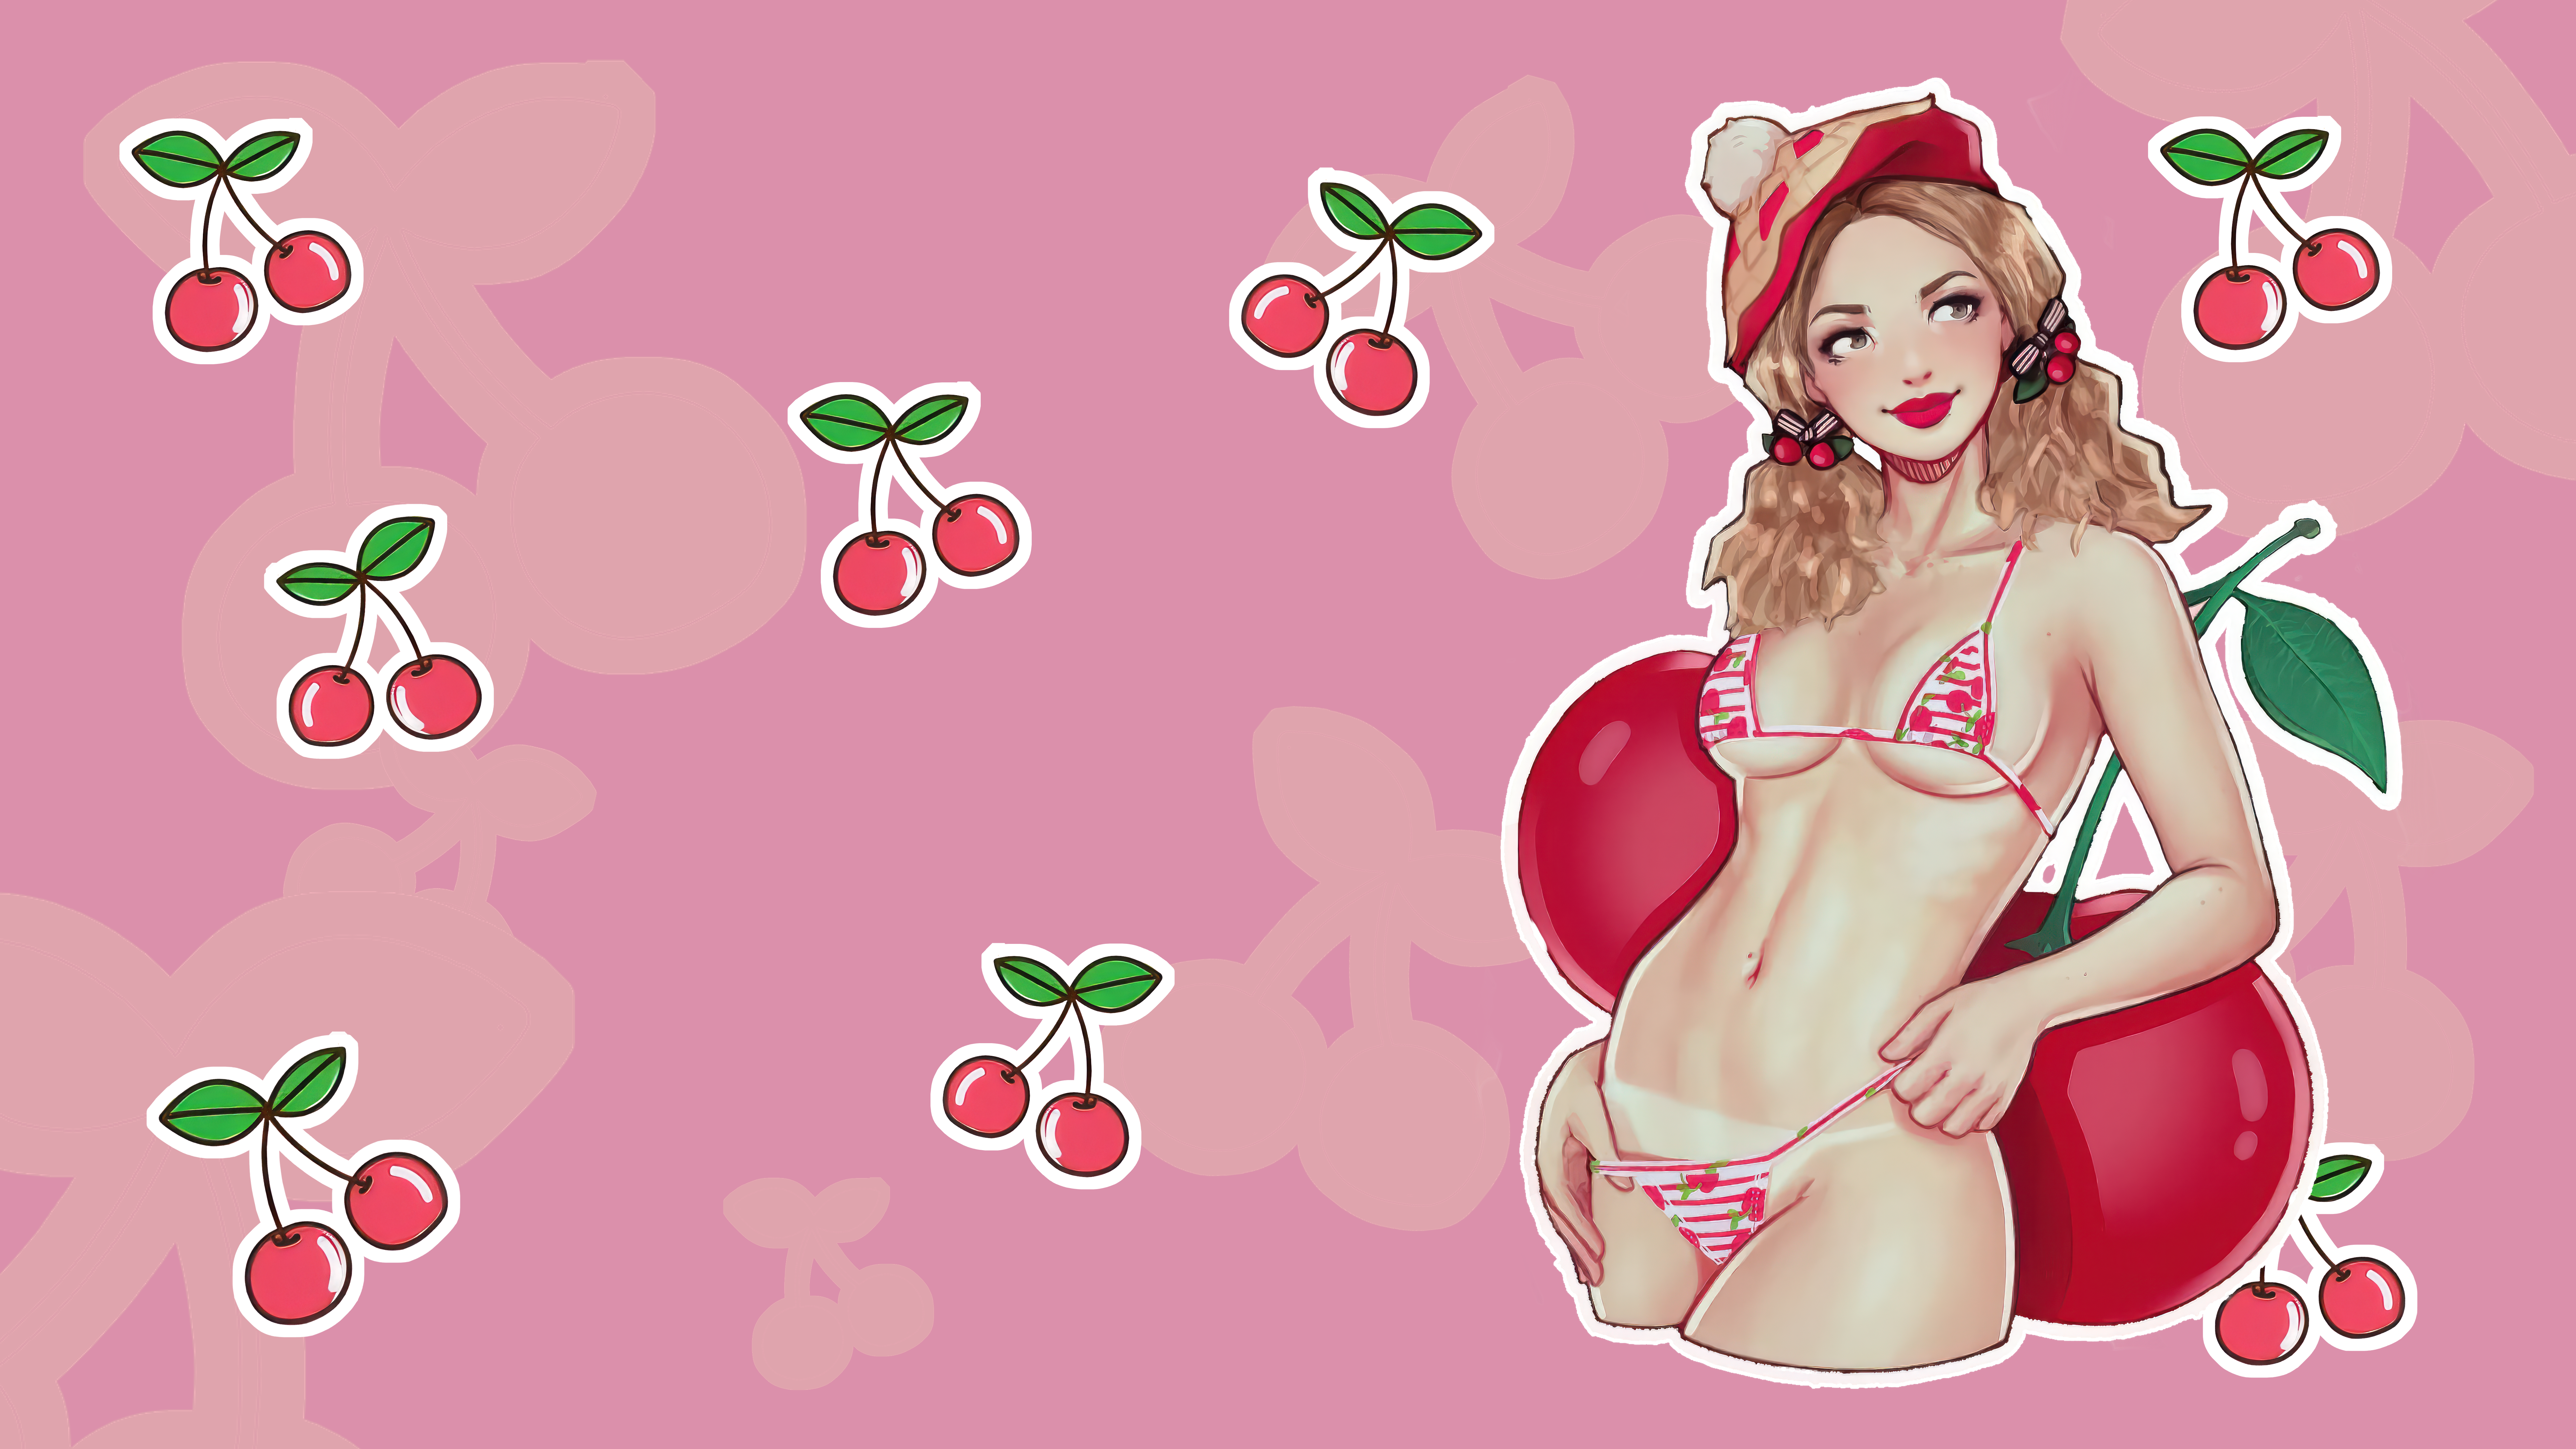 General 7680x4320 bikini women fruit stickers digital art 4K 8k UHD pastel drawn AI art simple background cherries smiling looking away photoshopped